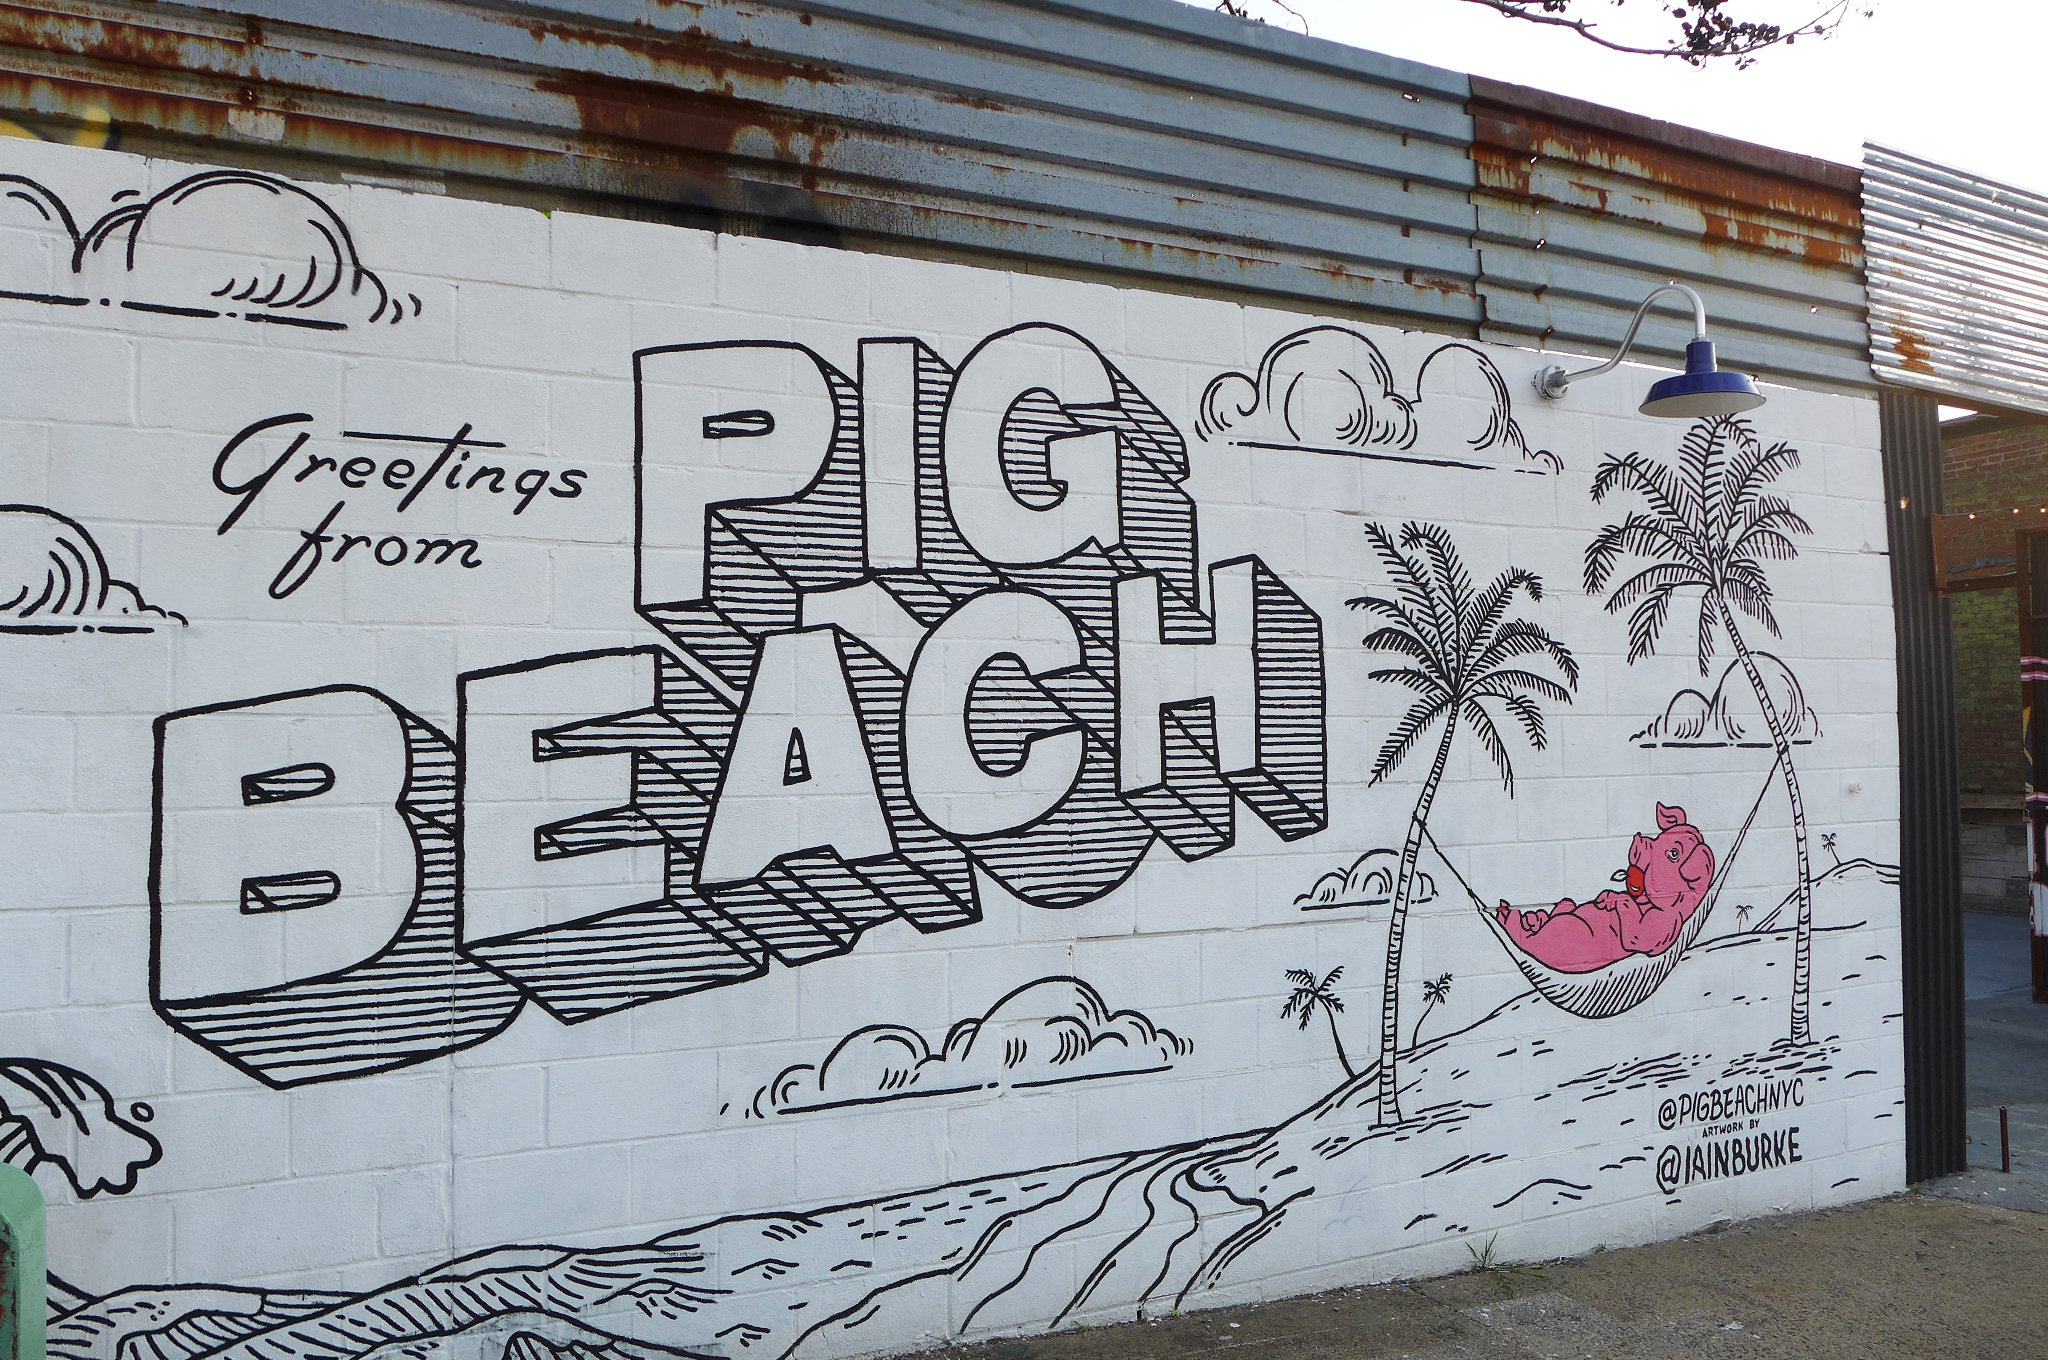 Pig Beach graffiti wall.